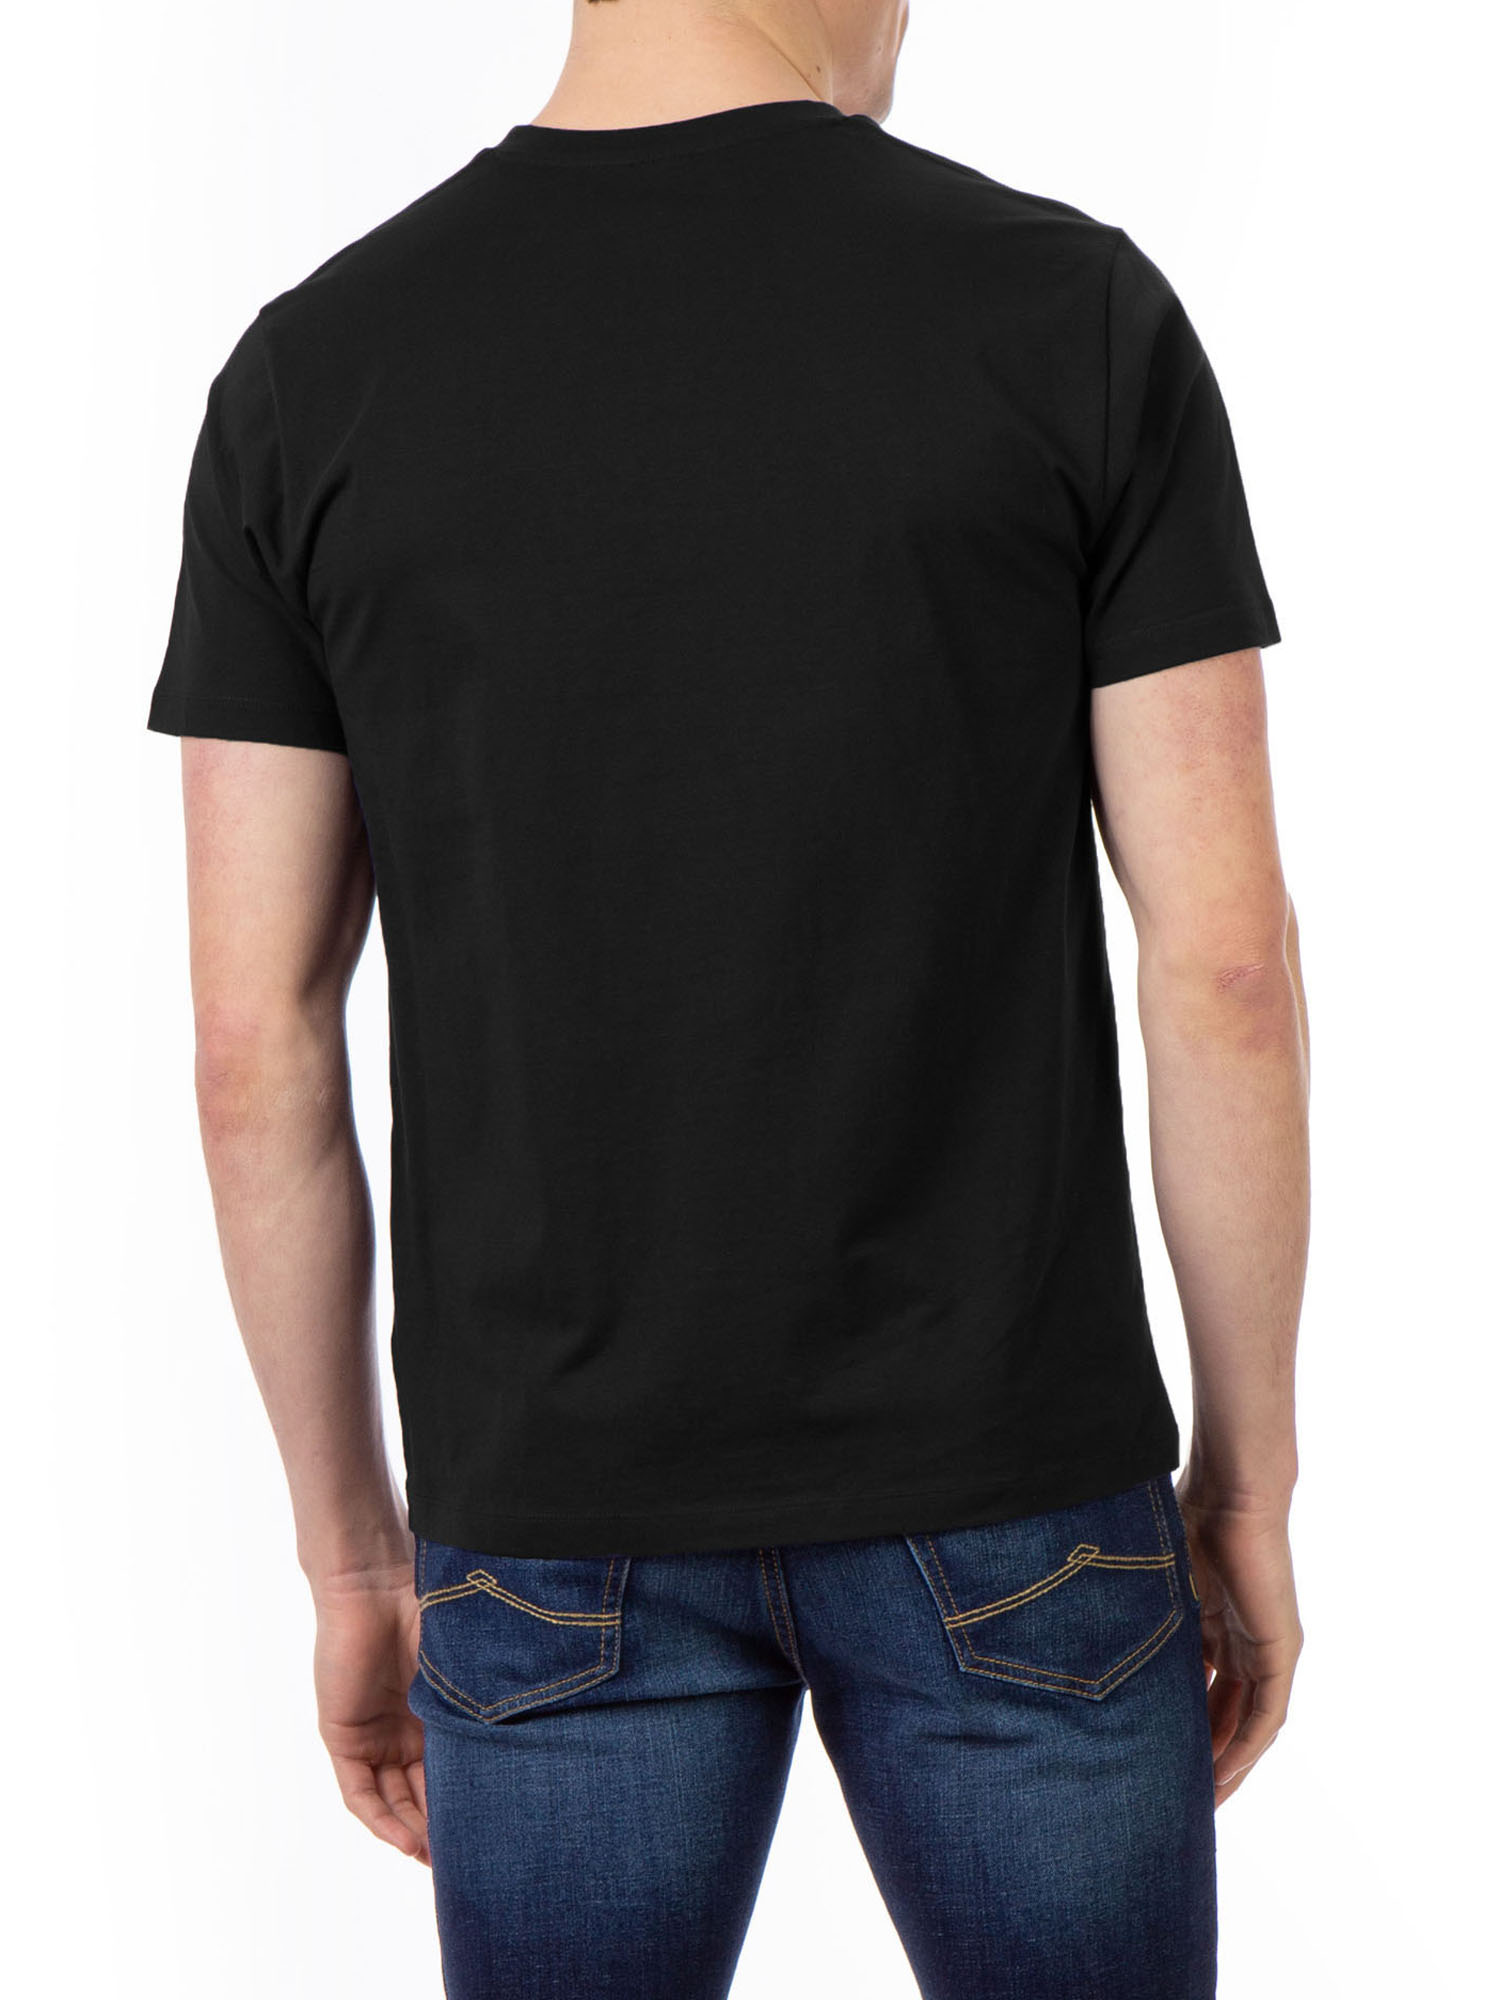 U.S. Polo Assn. Men's V-Neck T-Shirt - image 3 of 3